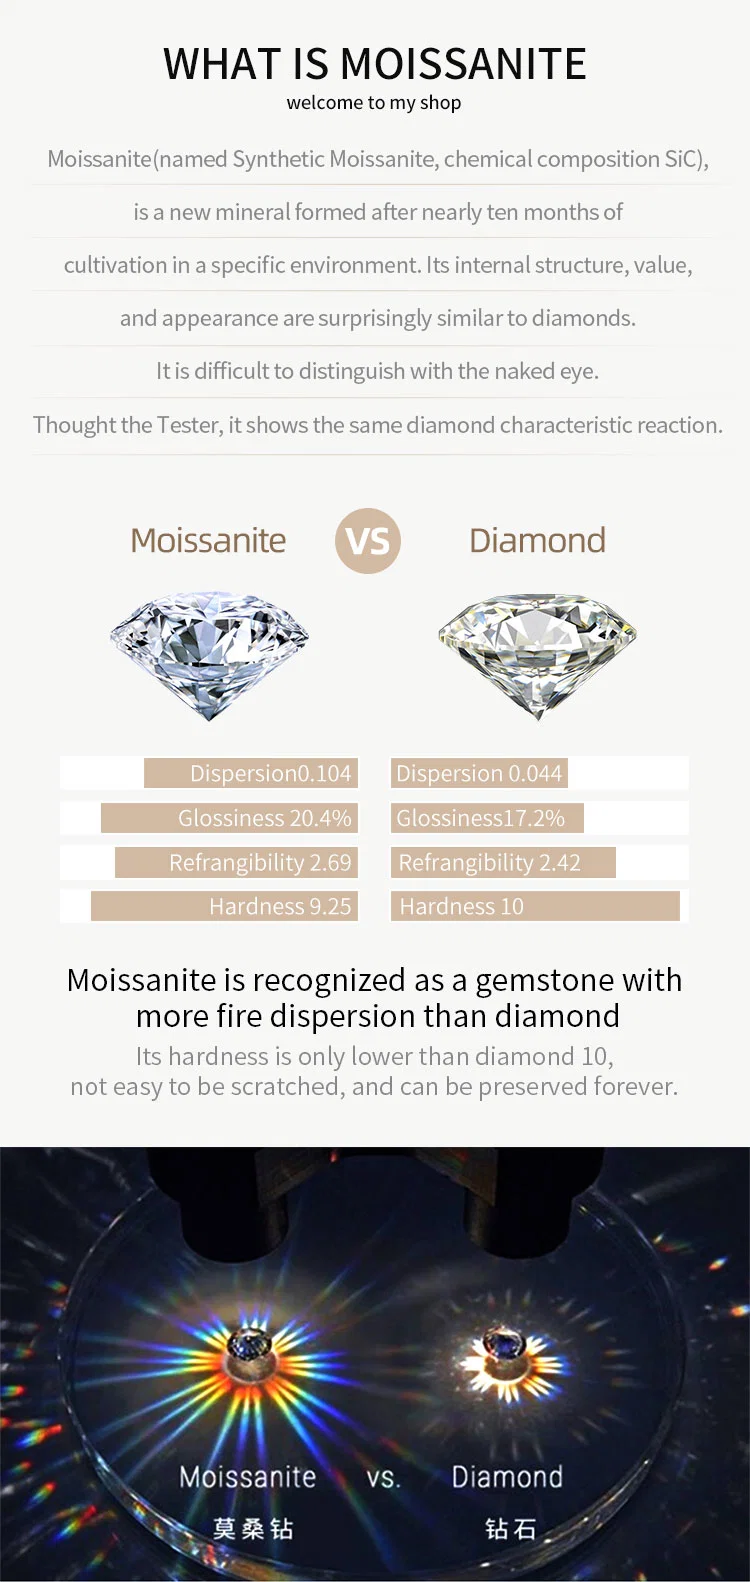 Xingyue Gems Moissanite Stone Custom, Wholesale Price of Gra Vvs Oval Kite Princess Bague Cut Loose Stones Diamond Moissanite